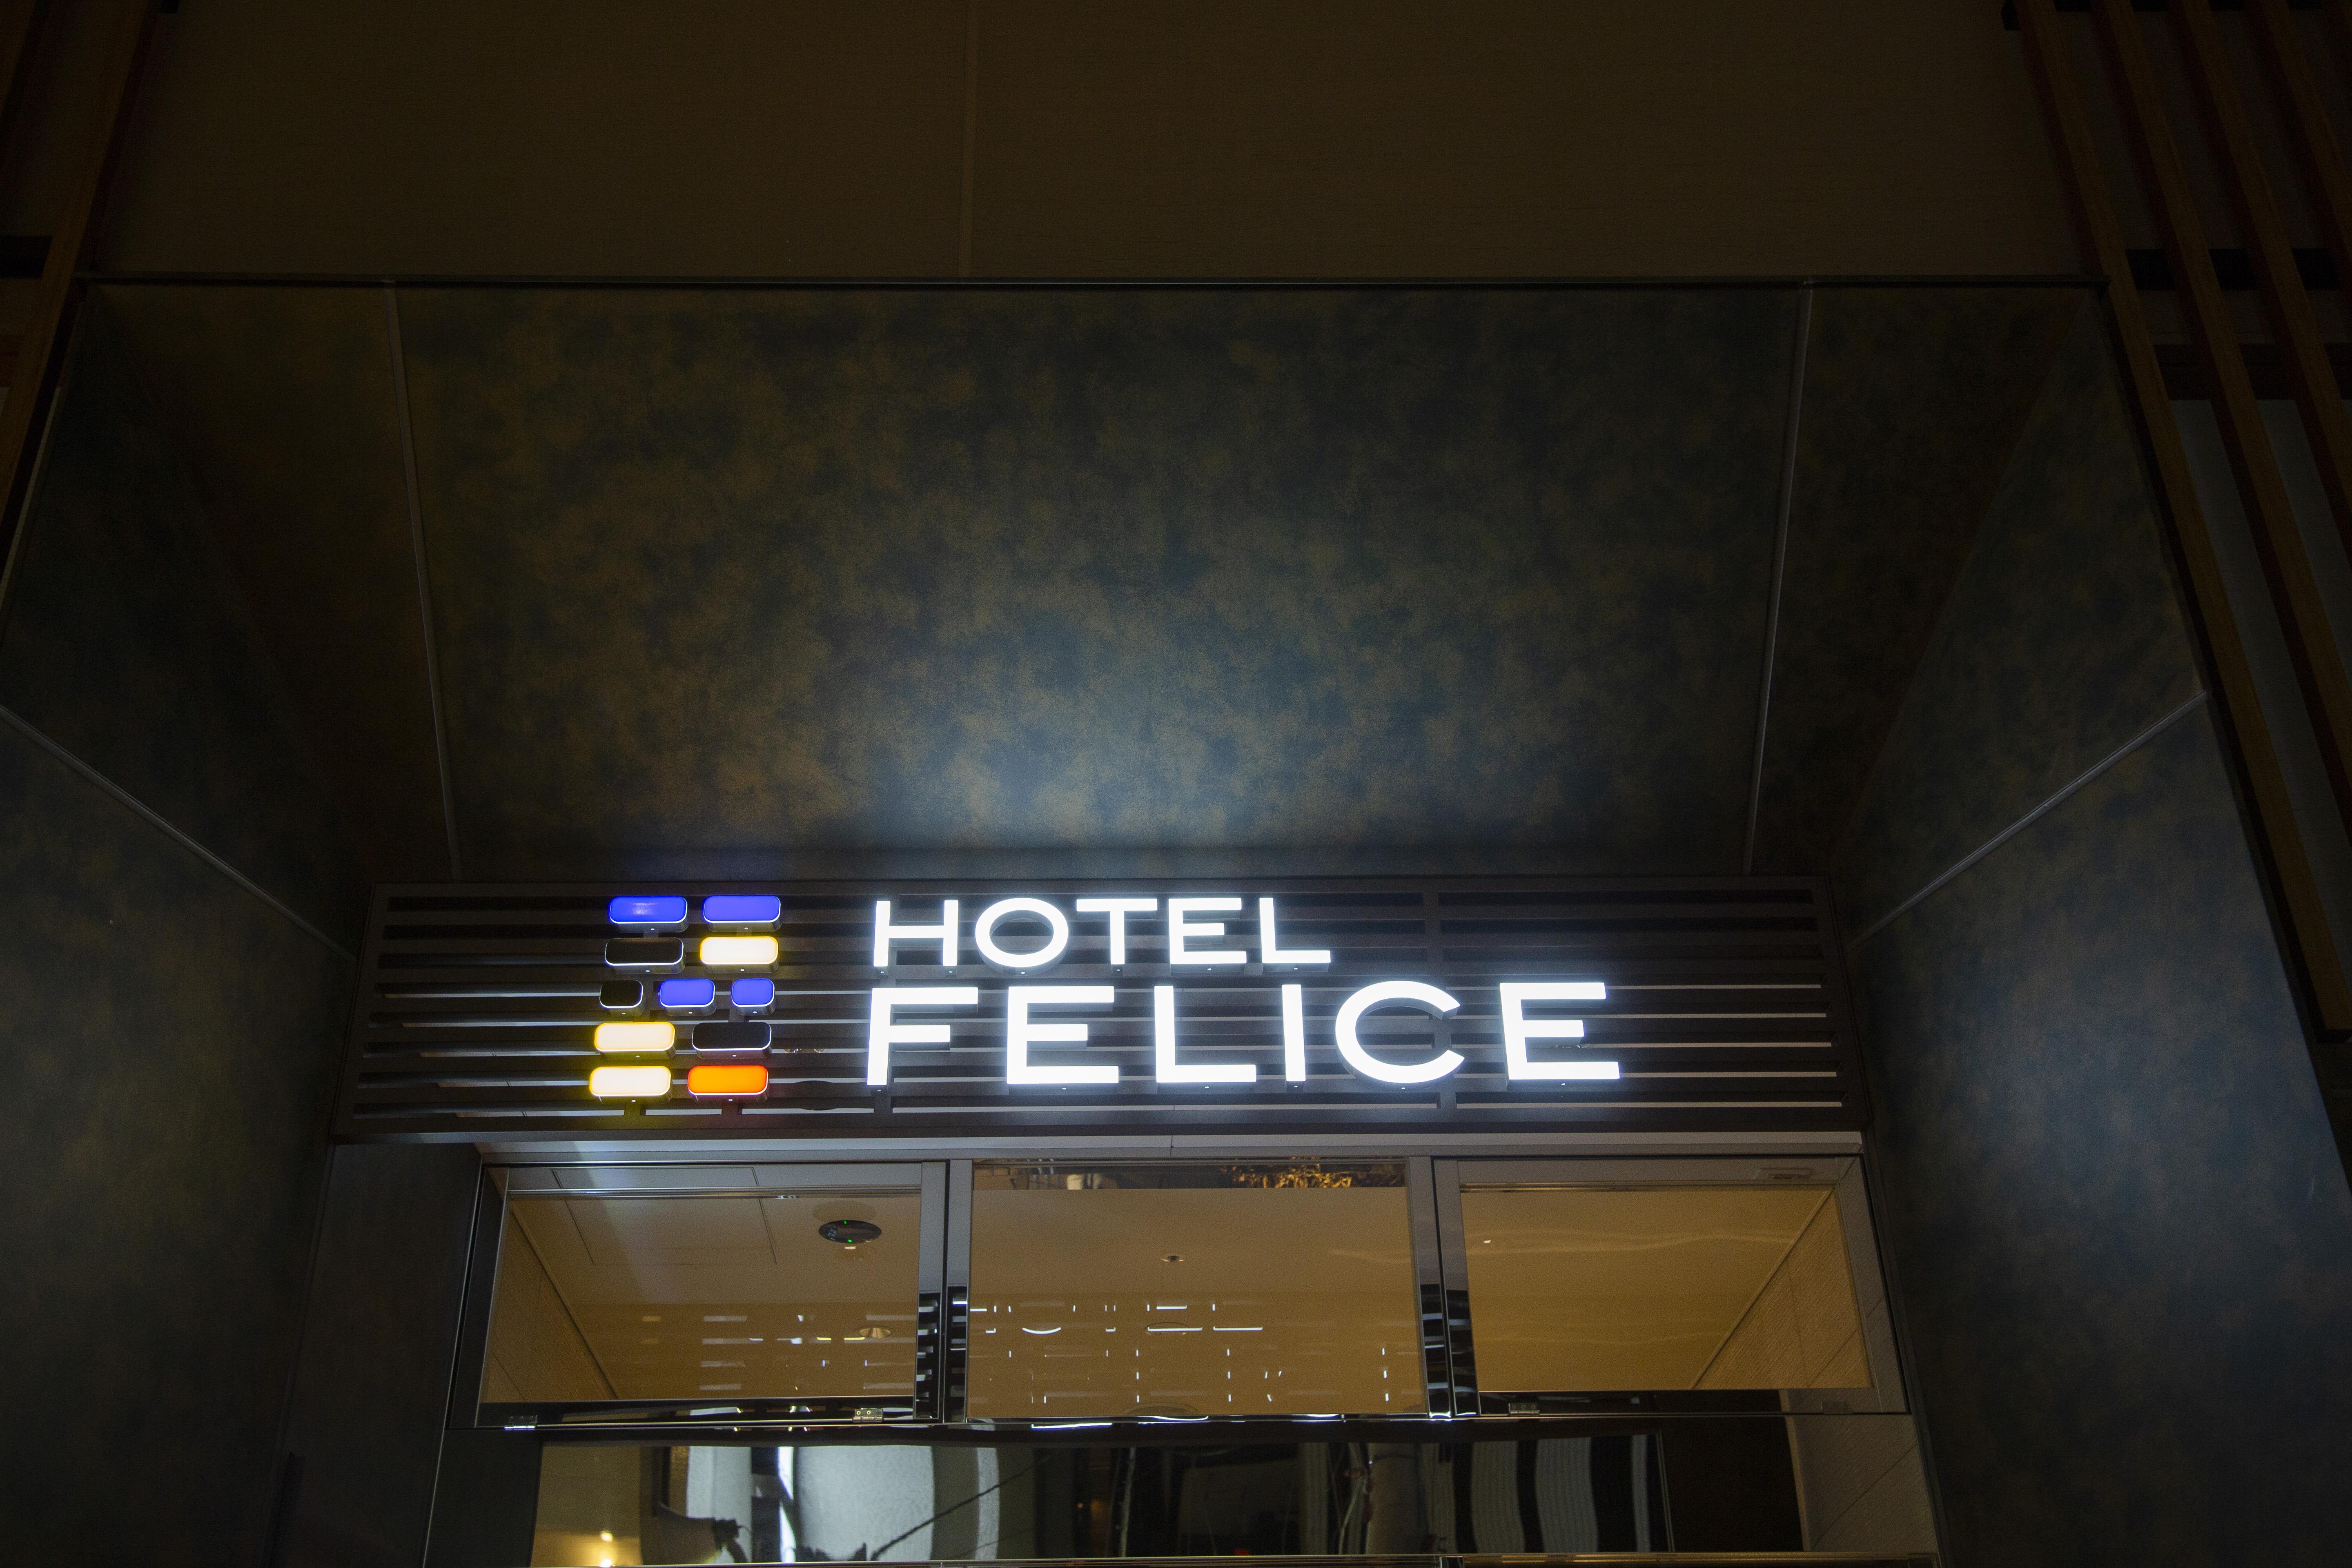 Hotel Hillarys Shinsaibashi Osaca Exterior foto